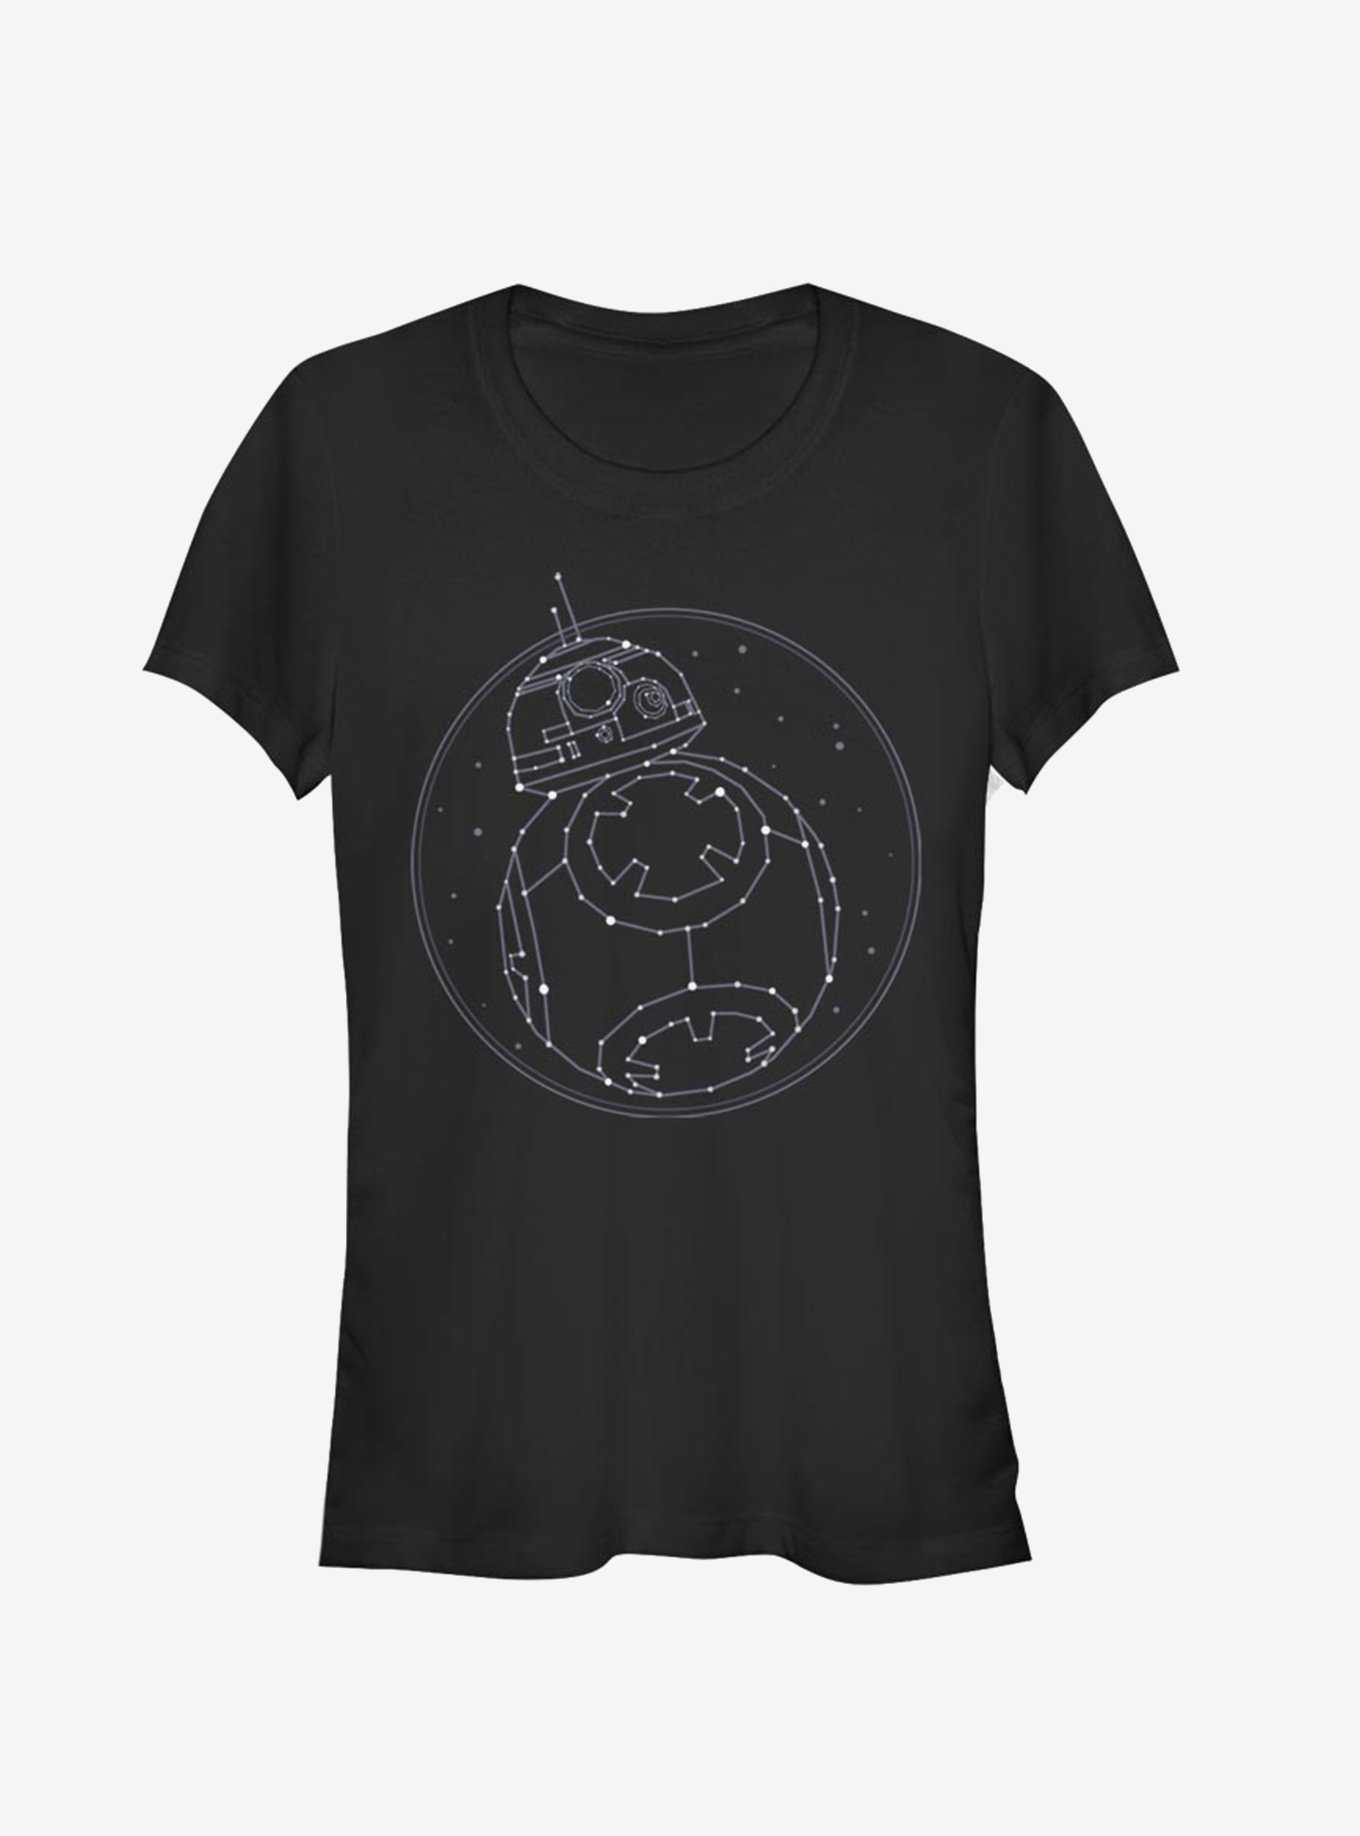 Star Wars Episode IX The Rise Of Skywalker Constellation Girls T-Shirt, , hi-res